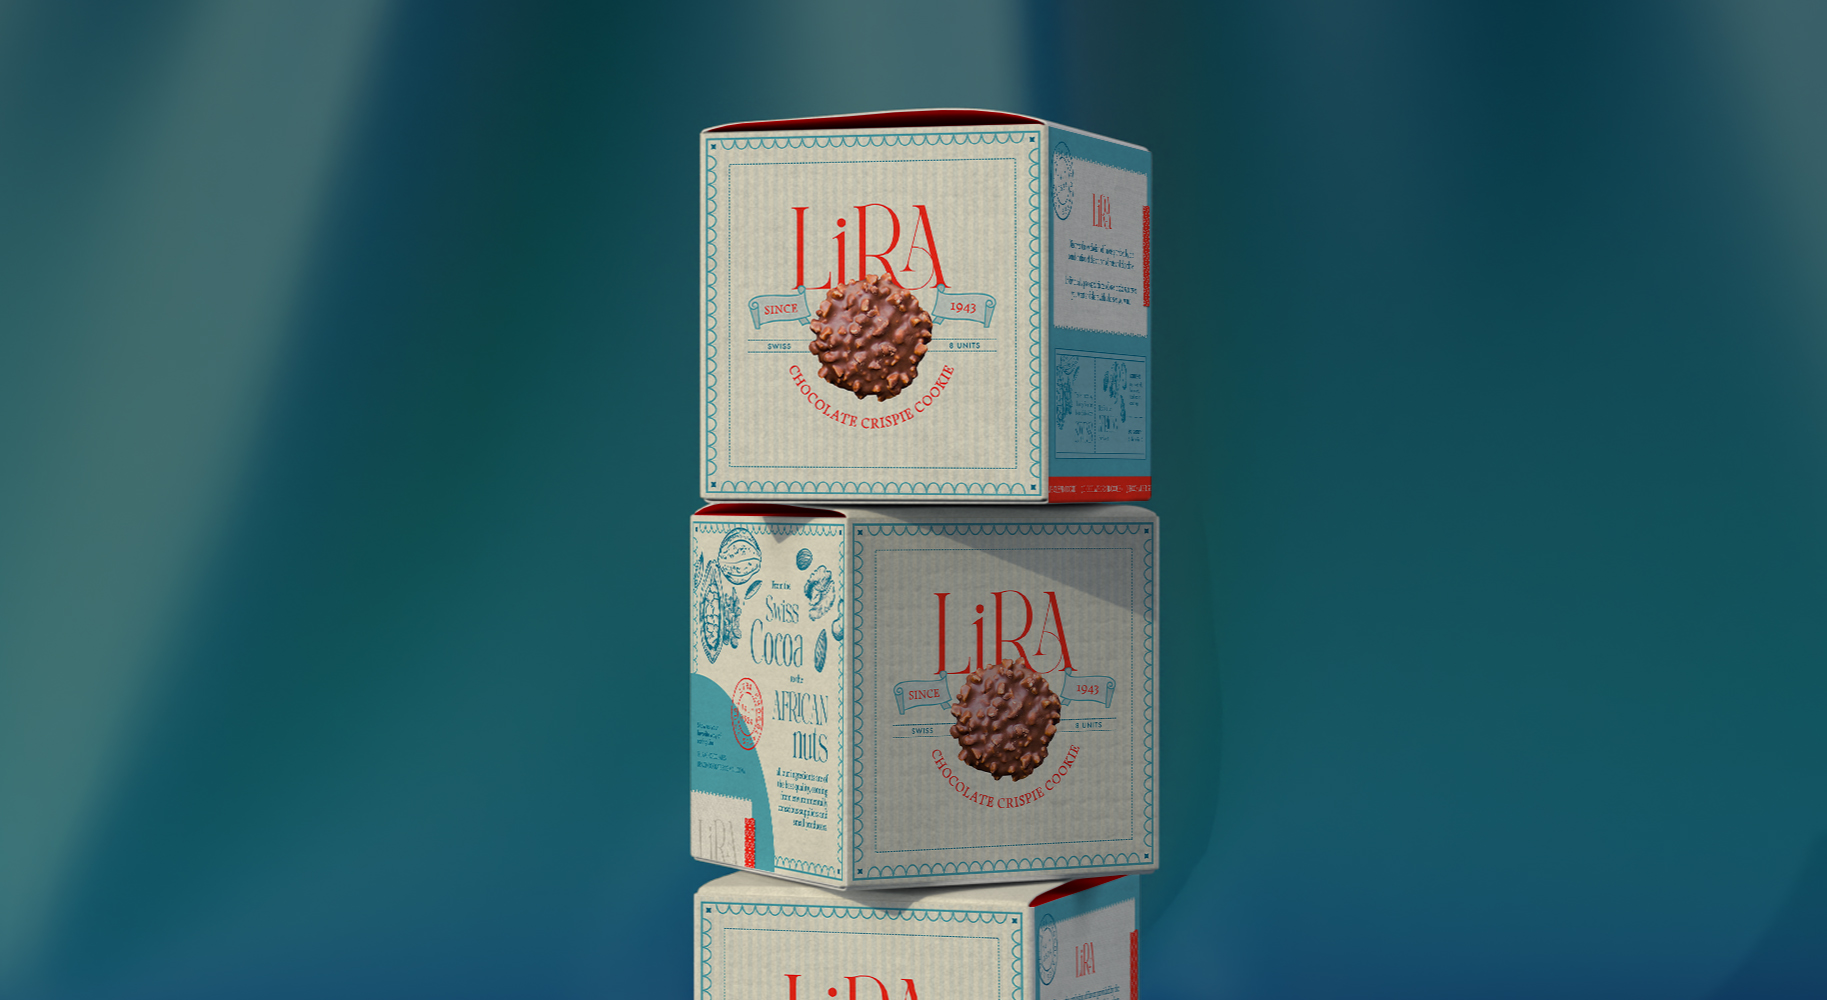 Lira Chocolates: Student Alexandra Pombo’s Nostalgic Packaging Design Concept for Premium Delicacies